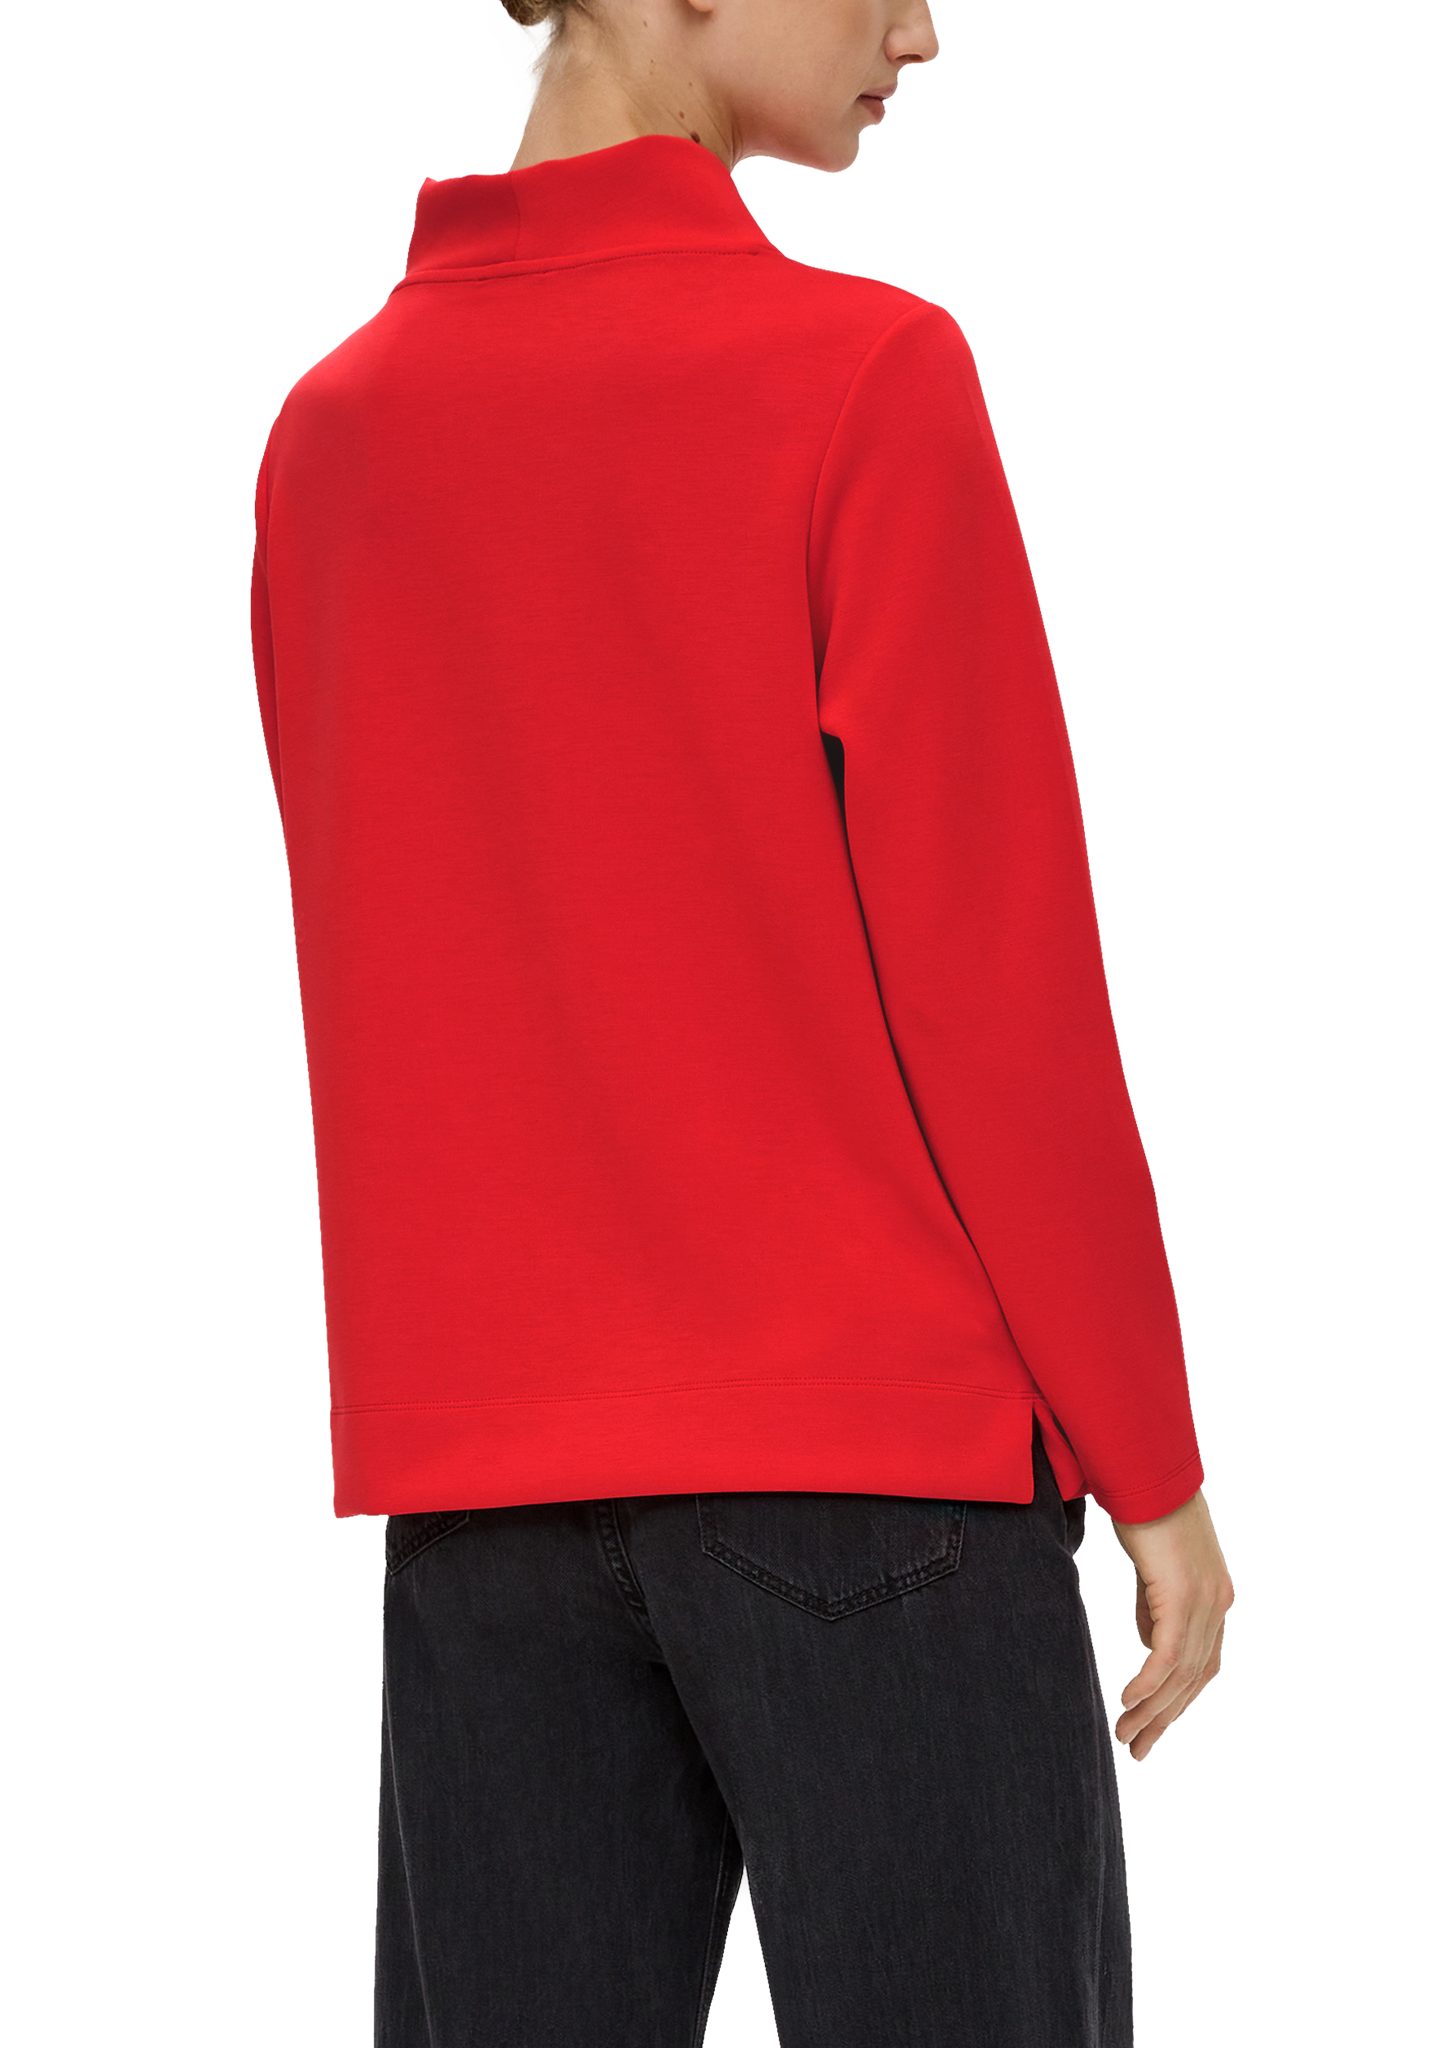 Kragen mit drapiertem Sweatshirt s.Oliver rot Scuba-Sweatshirt